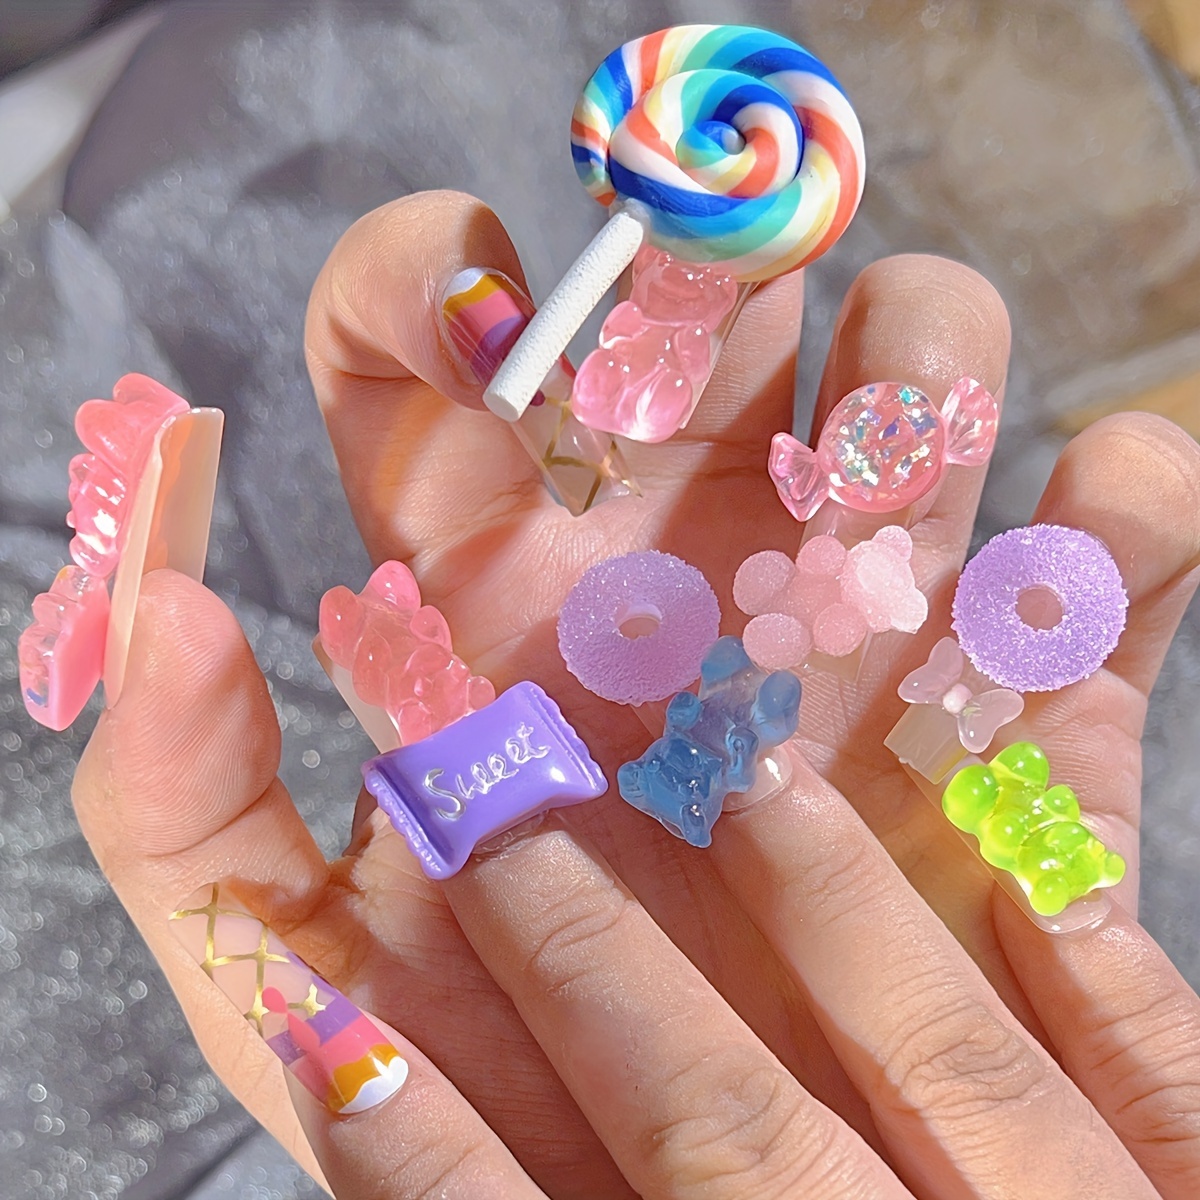 yolai 50pcs 3d gummy candy nail charms colorful sugar gummie candy lollipop  cute kawaii 3d nail art charms for nail art designs diy crafting  accessories 